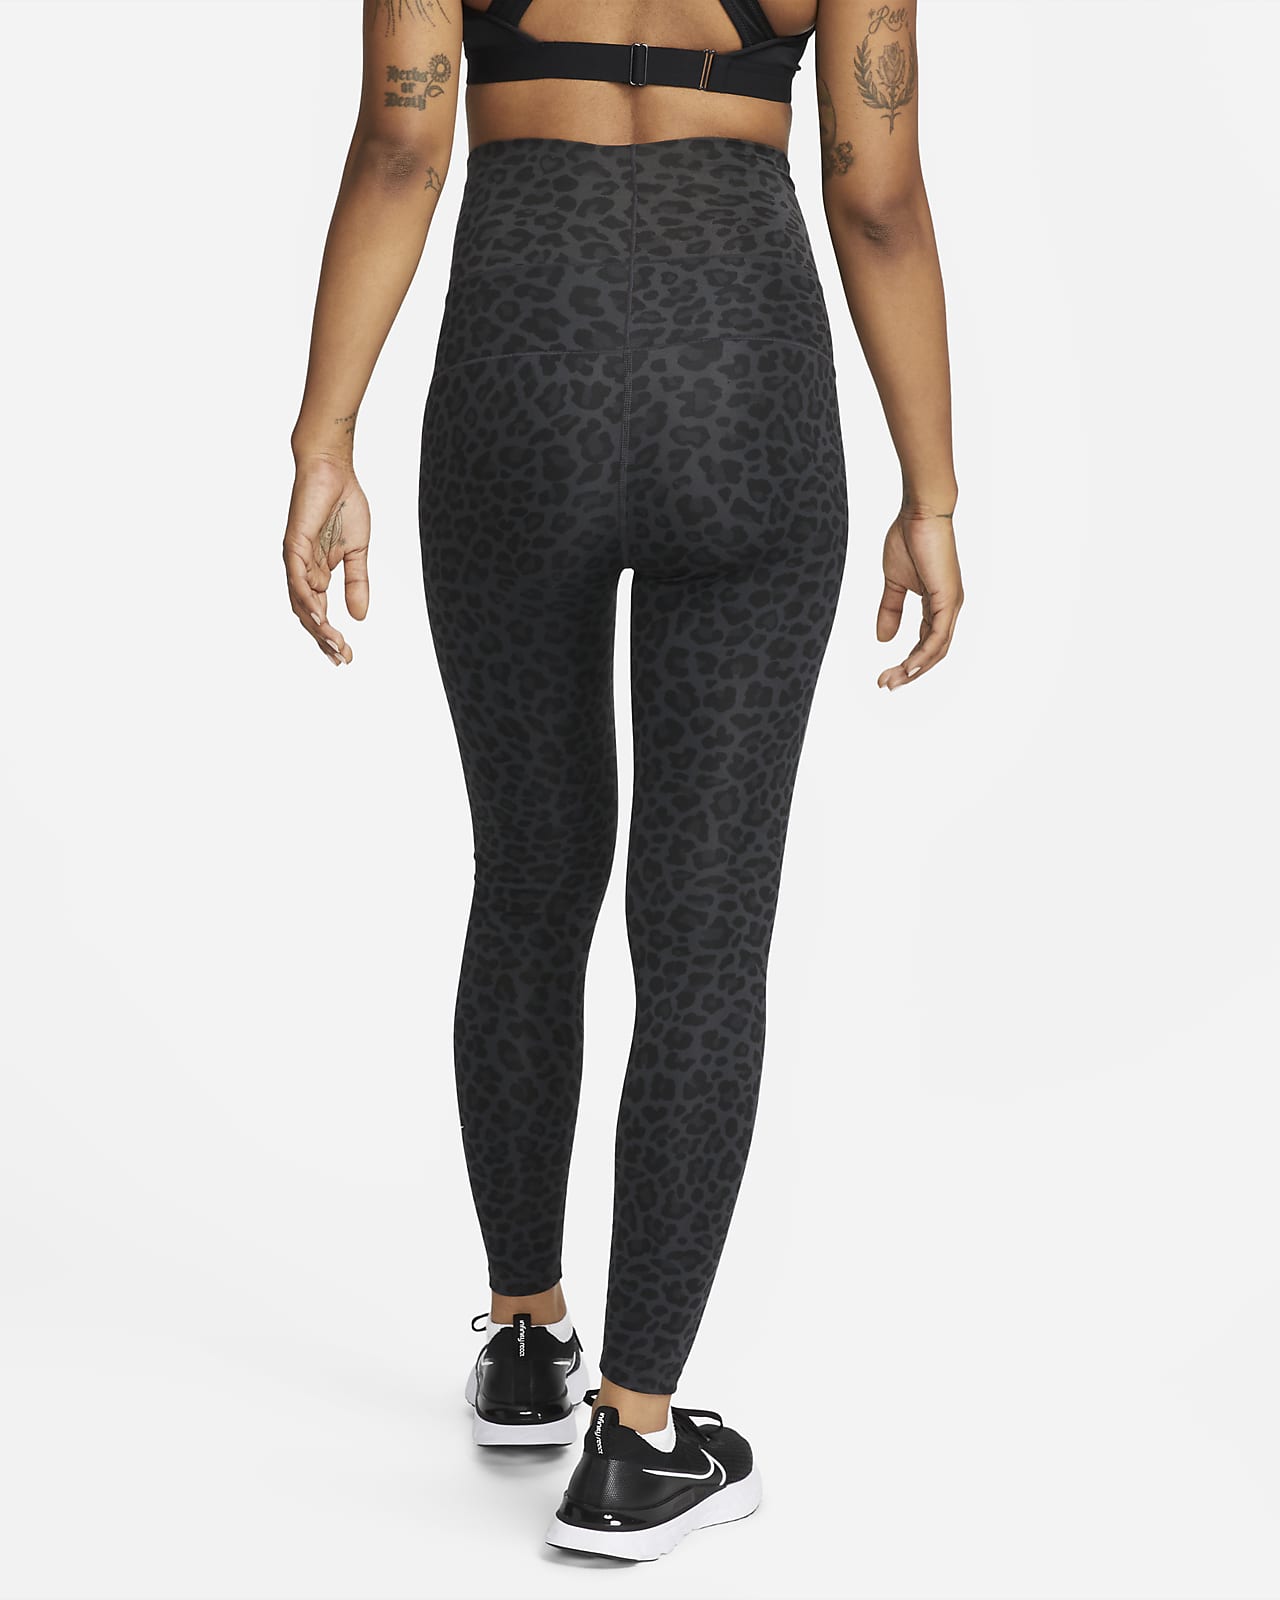 speler Injectie bedrijf Nike One (M) Women's High-Waisted Leopard Print Leggings (Maternity). Nike .com